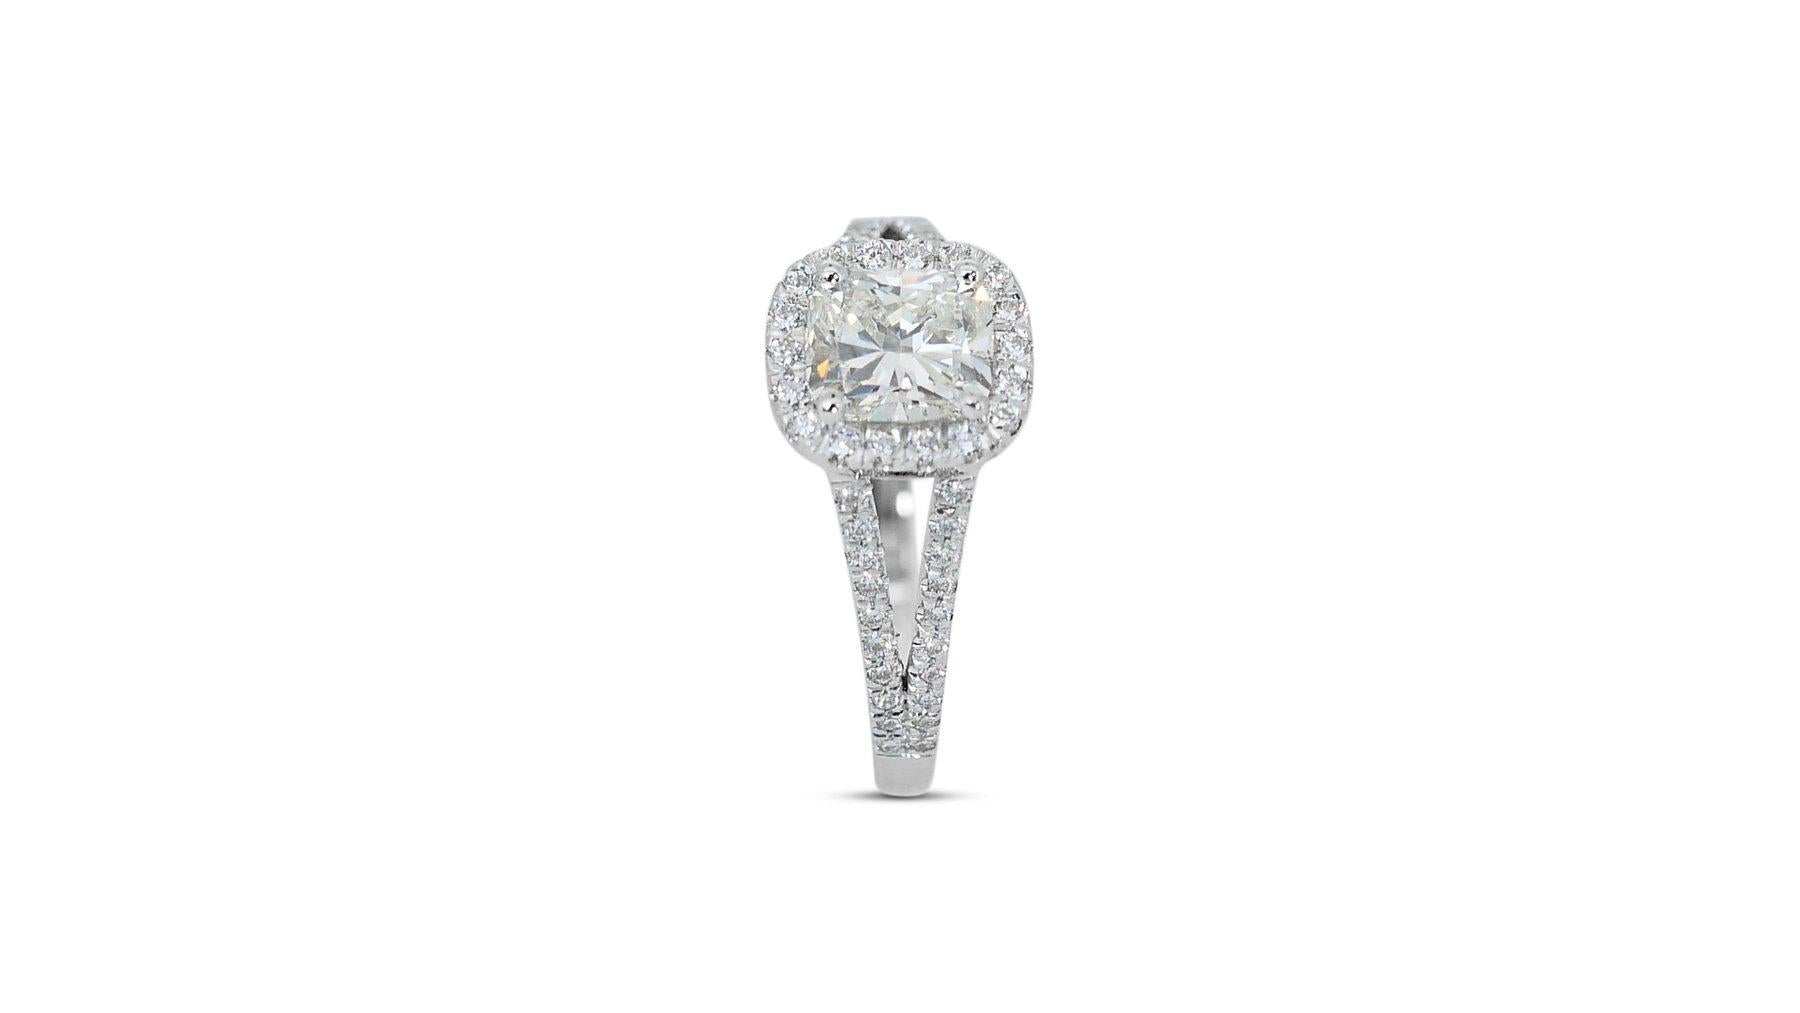 Captivating Ring features a Dazzling 1.01 carat cushion cut Natural Diamond 3